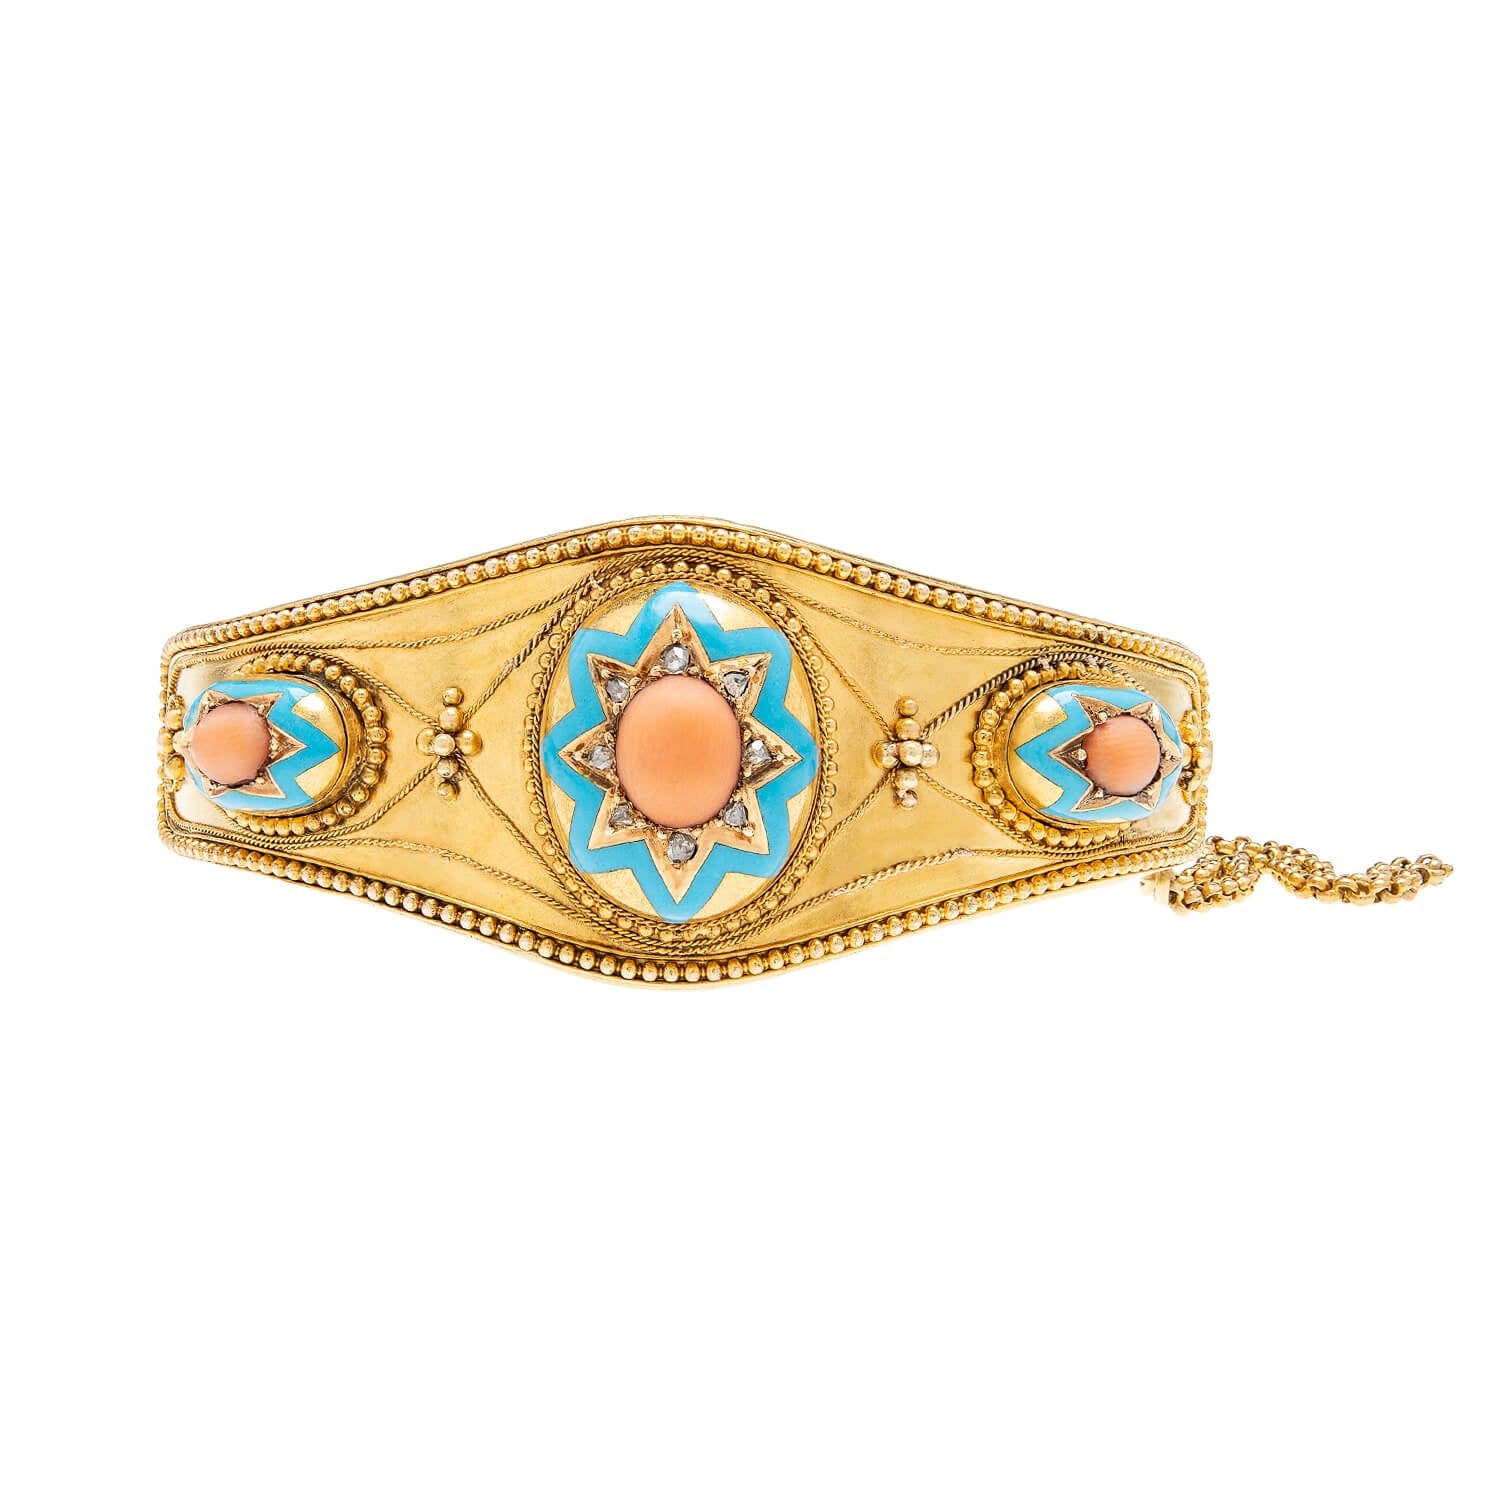 Victorian Gold-Filled Etruscan Wirework Bangle Wedding Bracelet